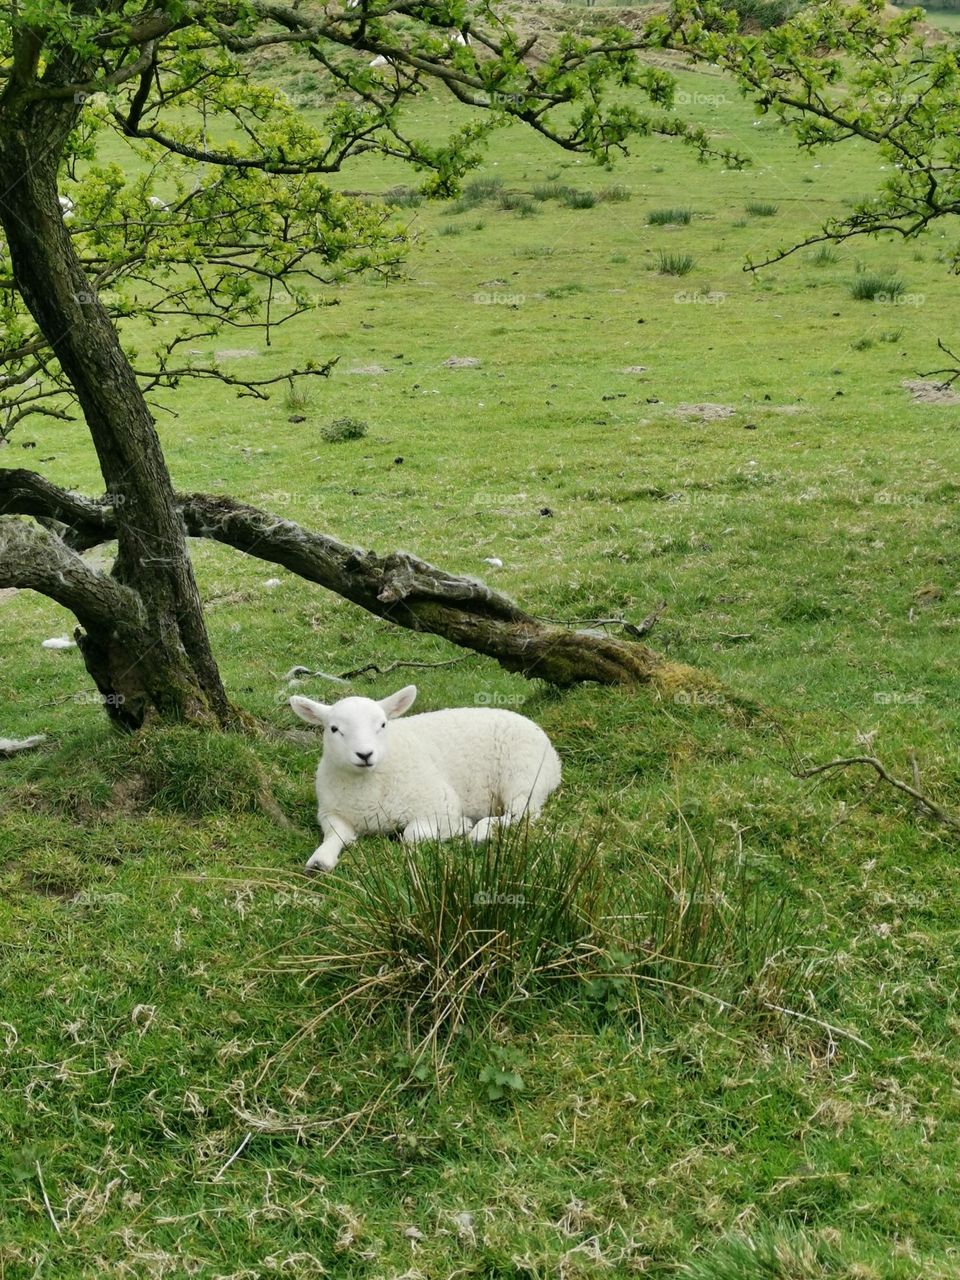 The little cute lamb is resting in a green field.